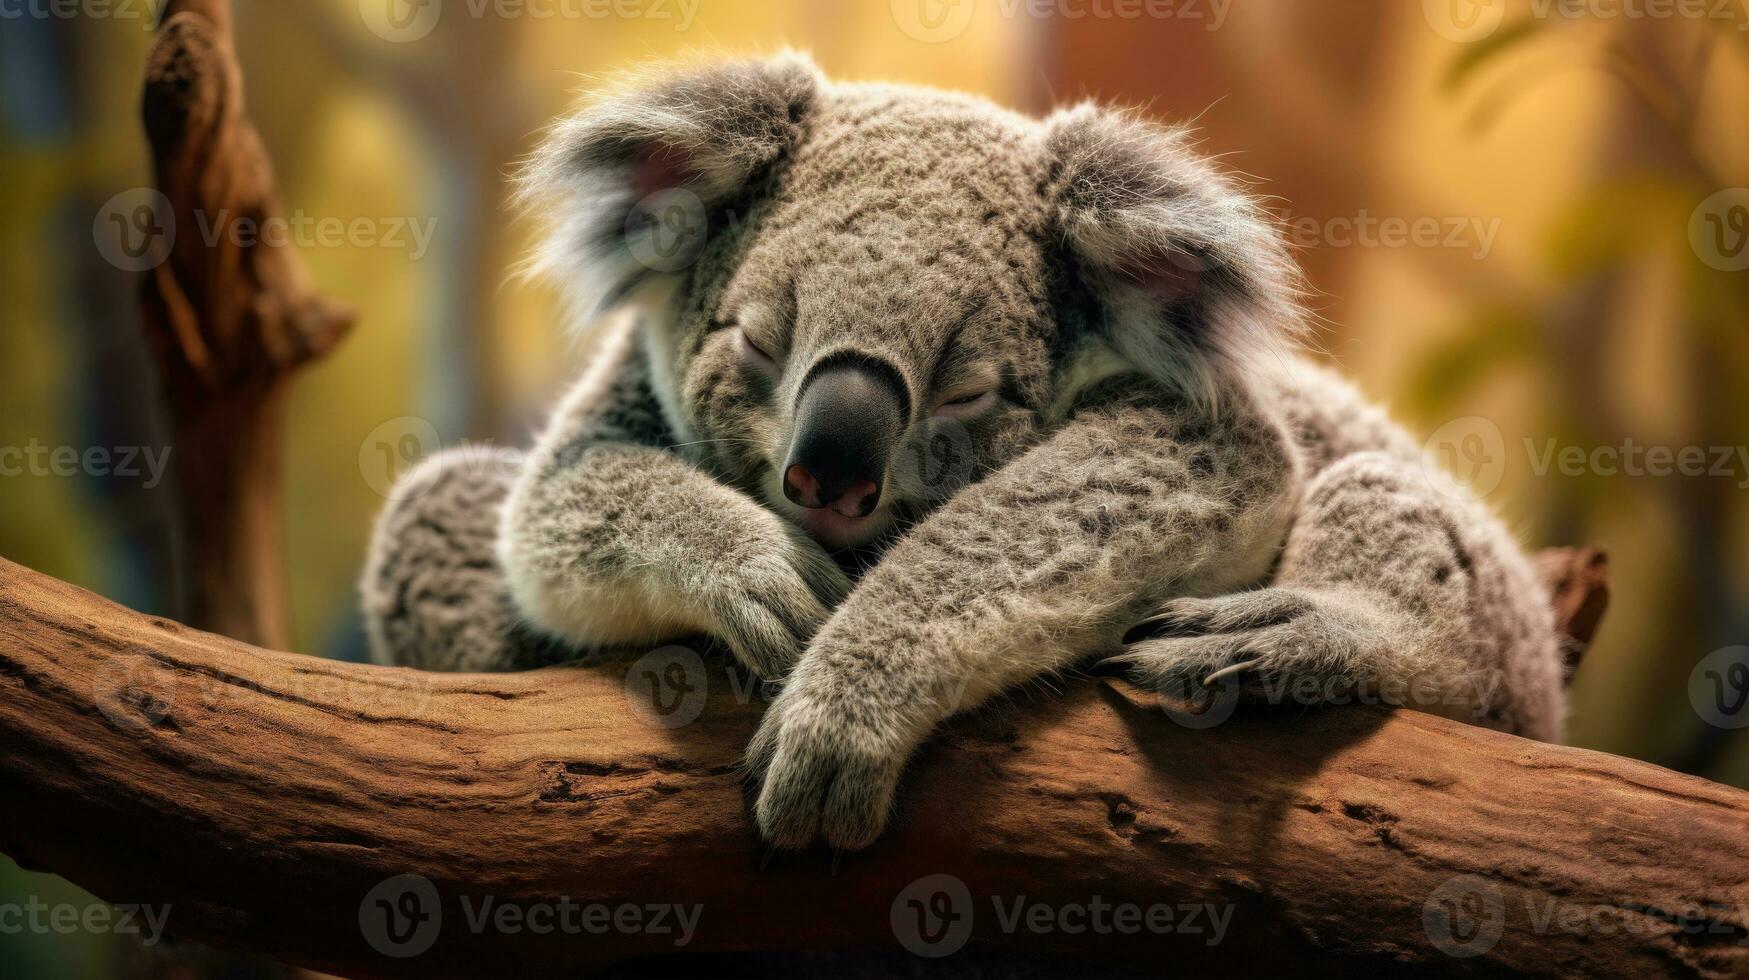 sonolento coala descansos em eucalipto ramo australiano animais selvagens e natureza encontro conceito ai gerado foto